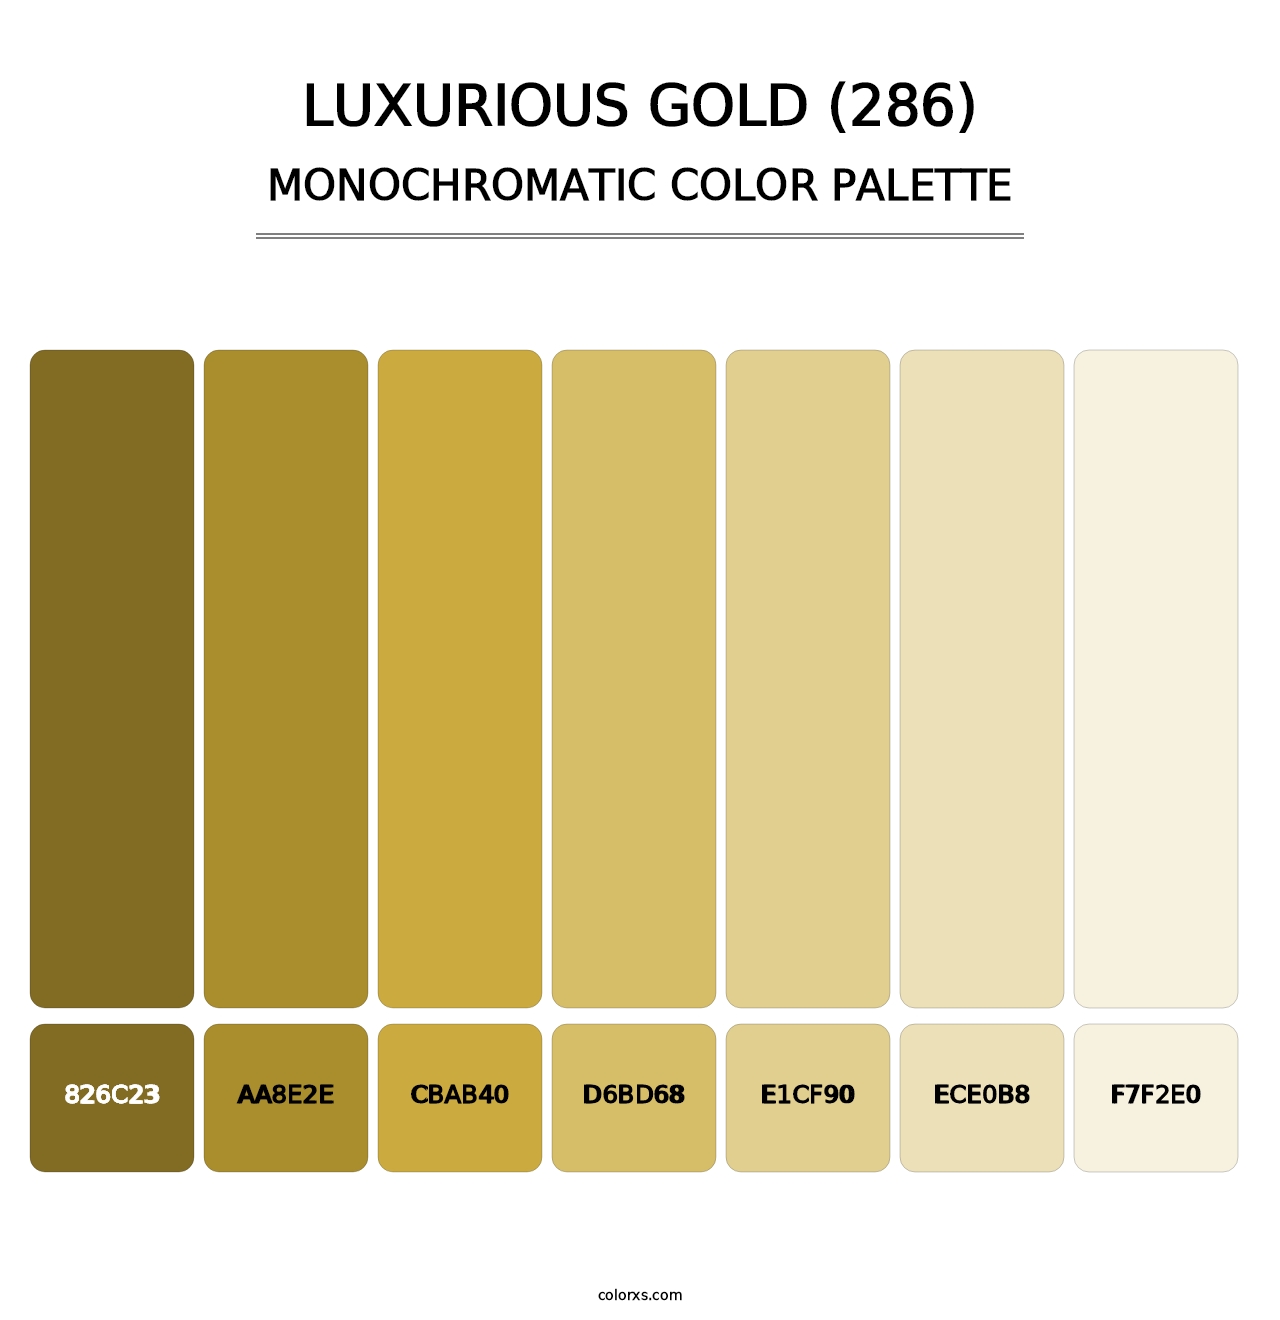 Luxurious Gold (286) - Monochromatic Color Palette